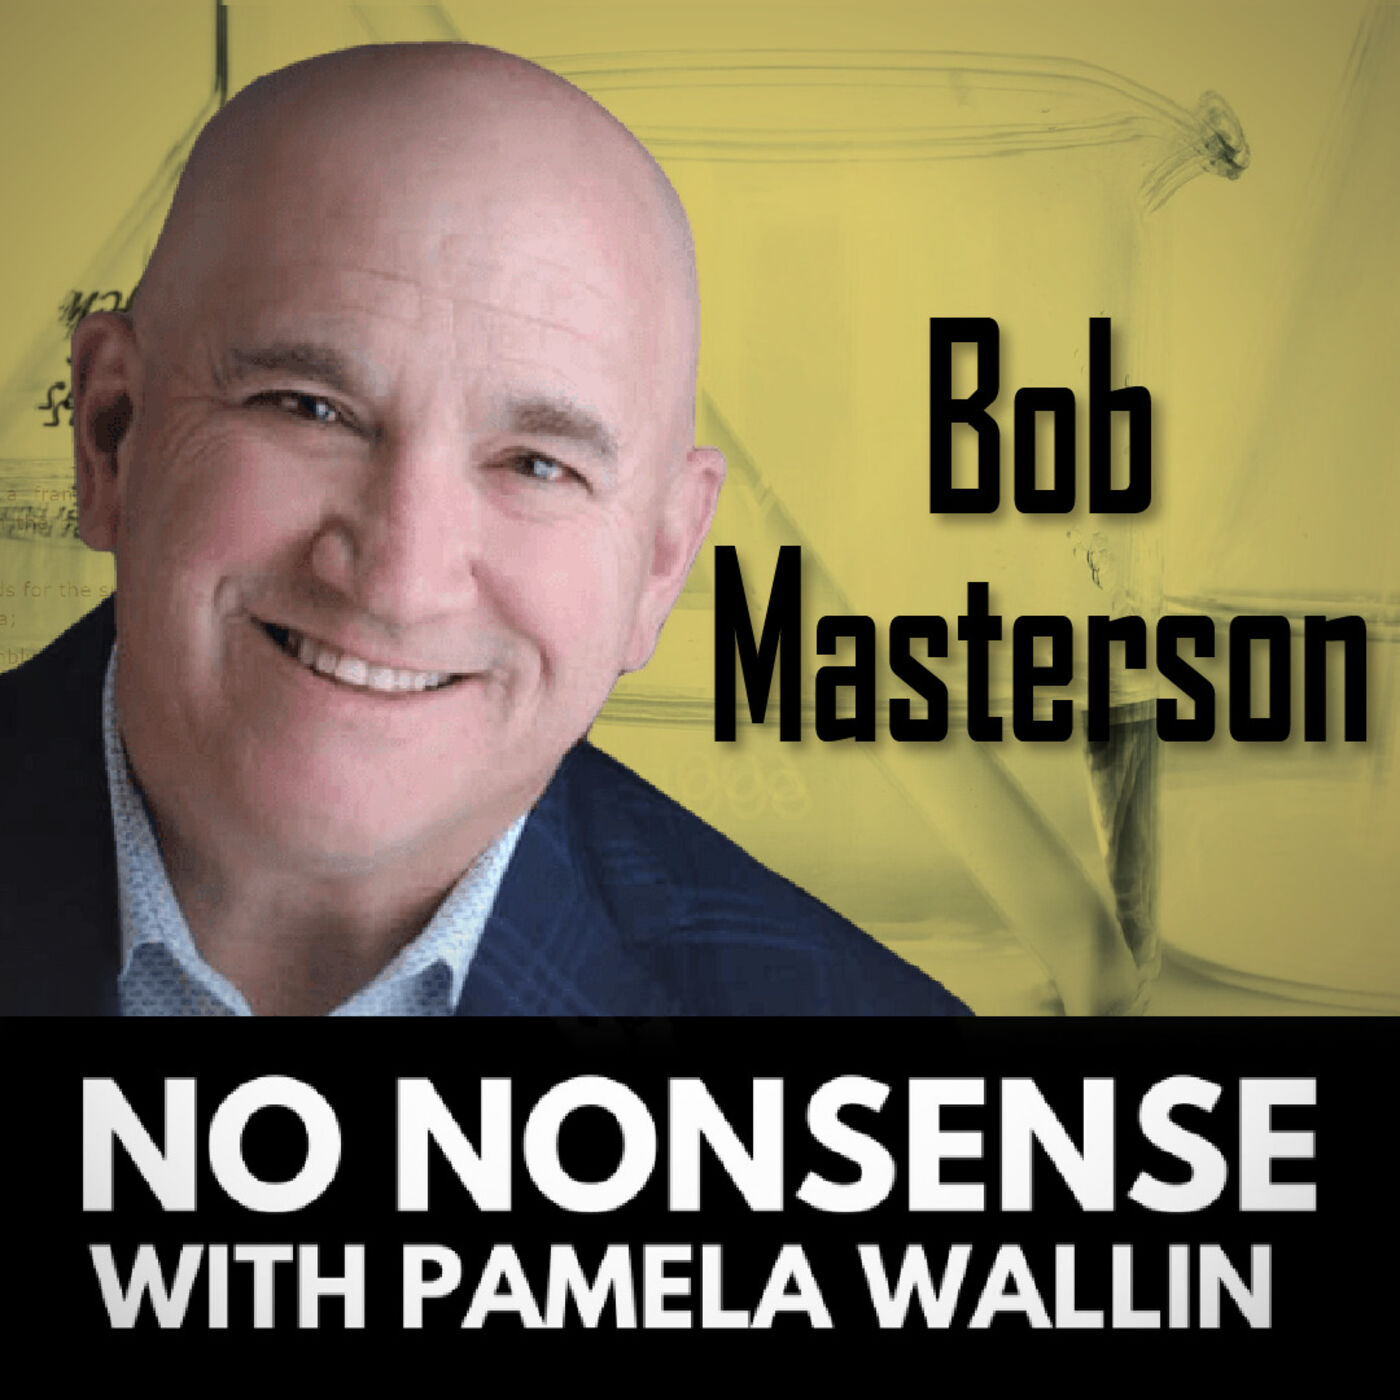 No Nonsense with Pamela Wallin Archives - Pamela Wallin